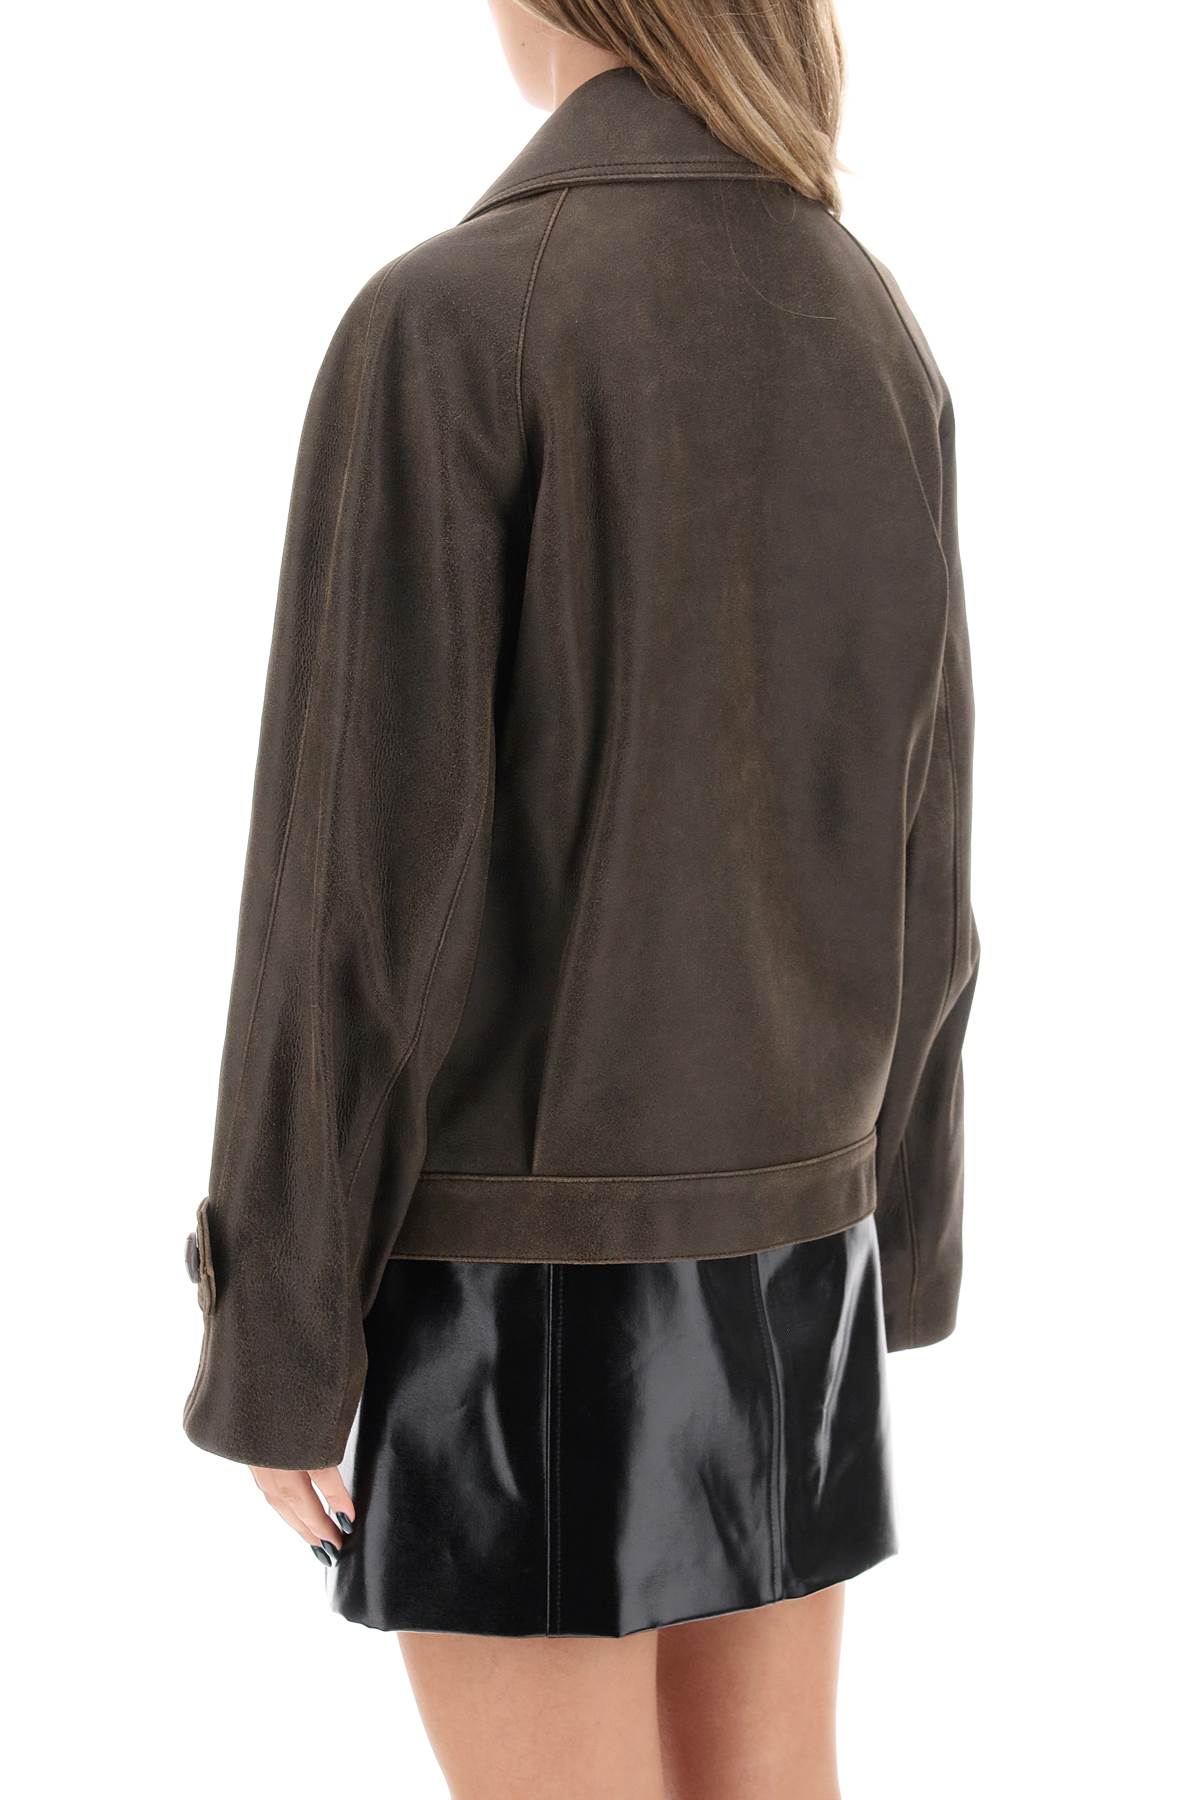 Shop Mvp Wardrobe Solferino Jacket In Vintage-effect Leather In Grece (brown)